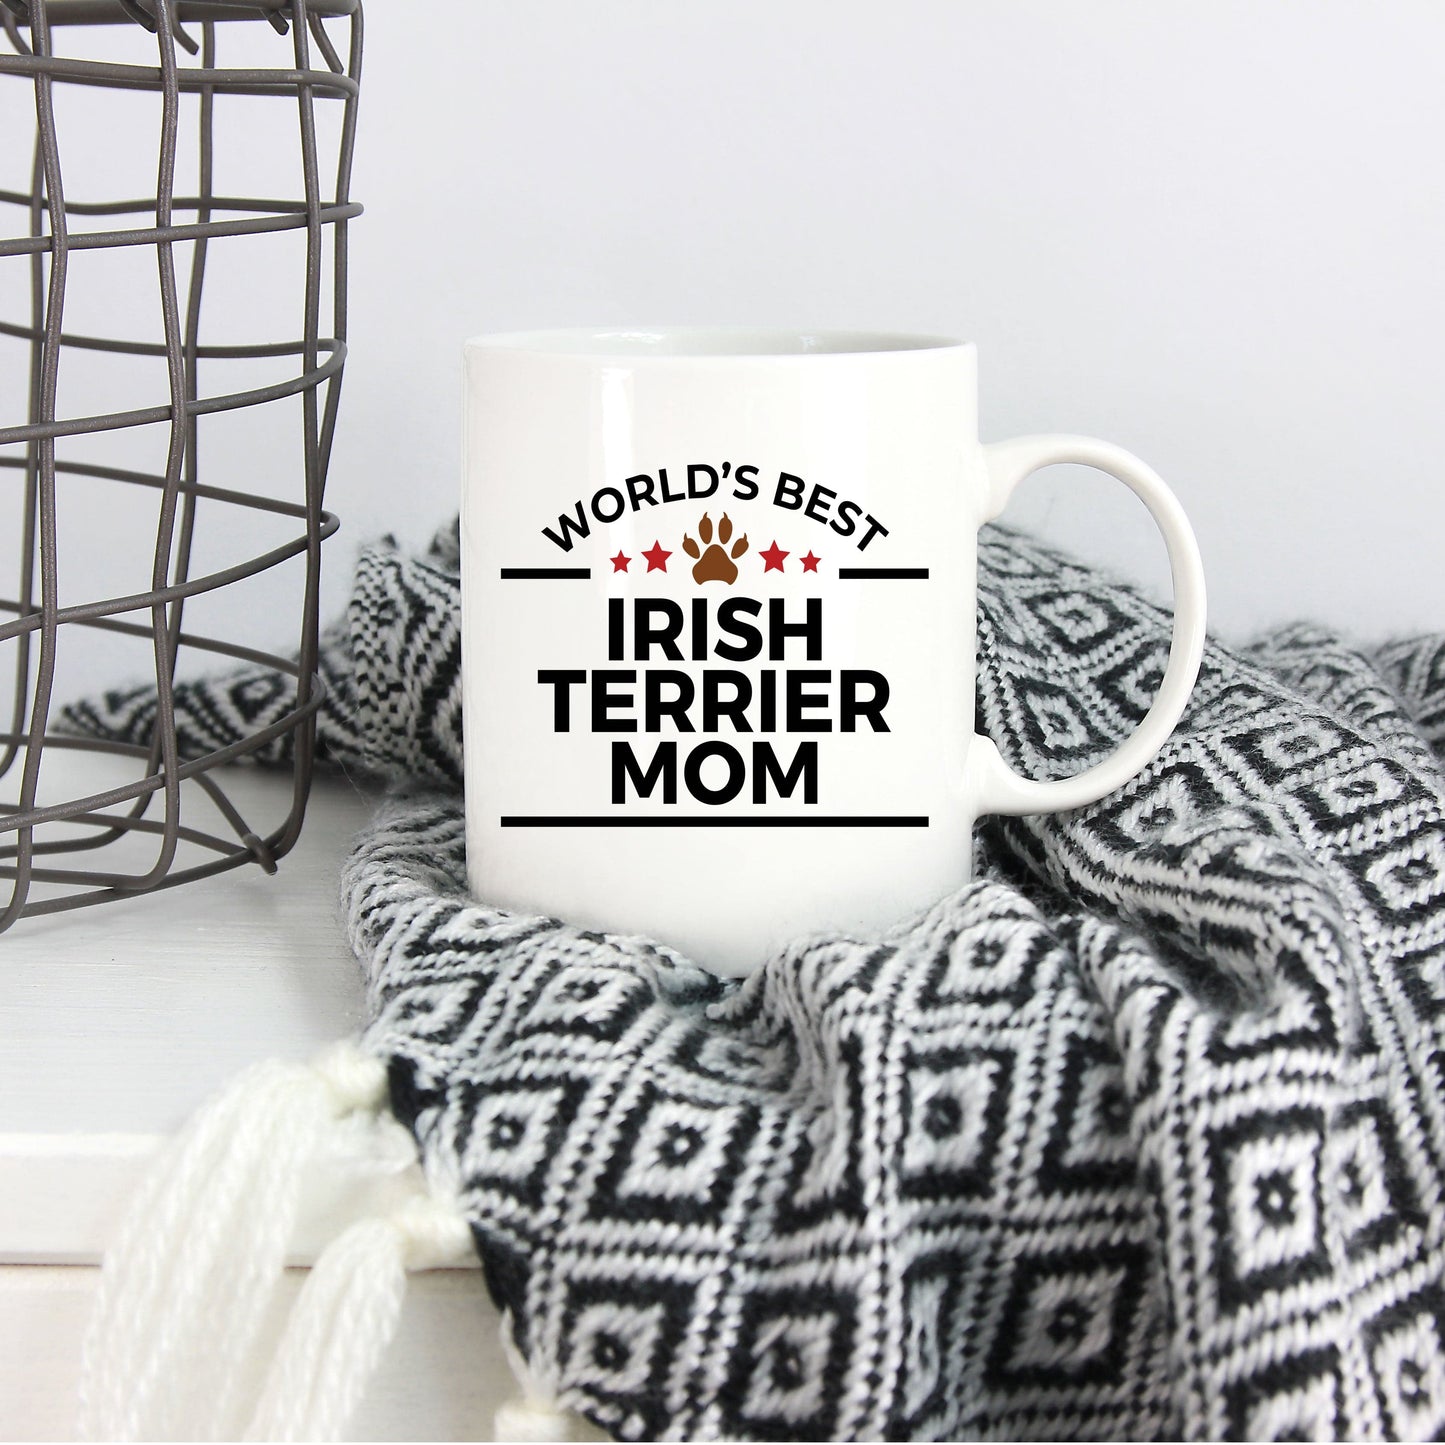 Irish Terrier Dog Lover Gift World's Best Mom Birthday Mother's Day White Ceramic Coffee Mug